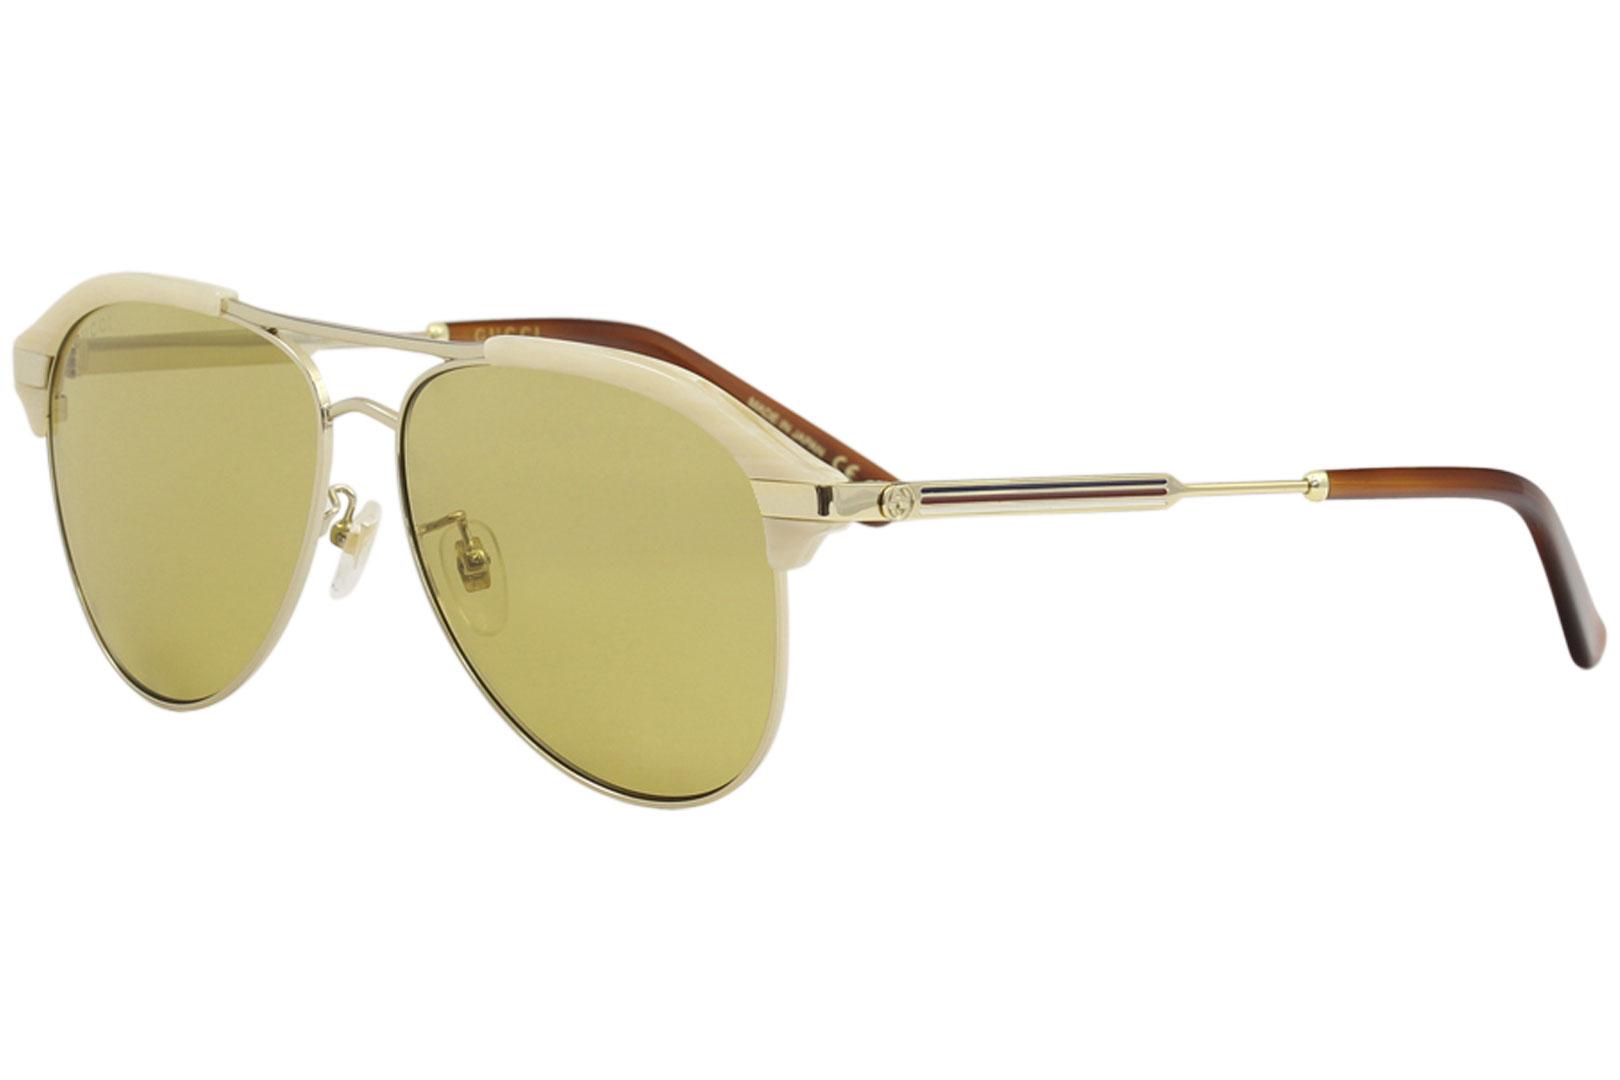 Gucci Men's GG0288SA GG/0288/SA Fashion Pilot Sunglasses - Beige Gold/Brown   004 -  Lens 60 Bridge 14 Temple 150mm (Asian Fit)